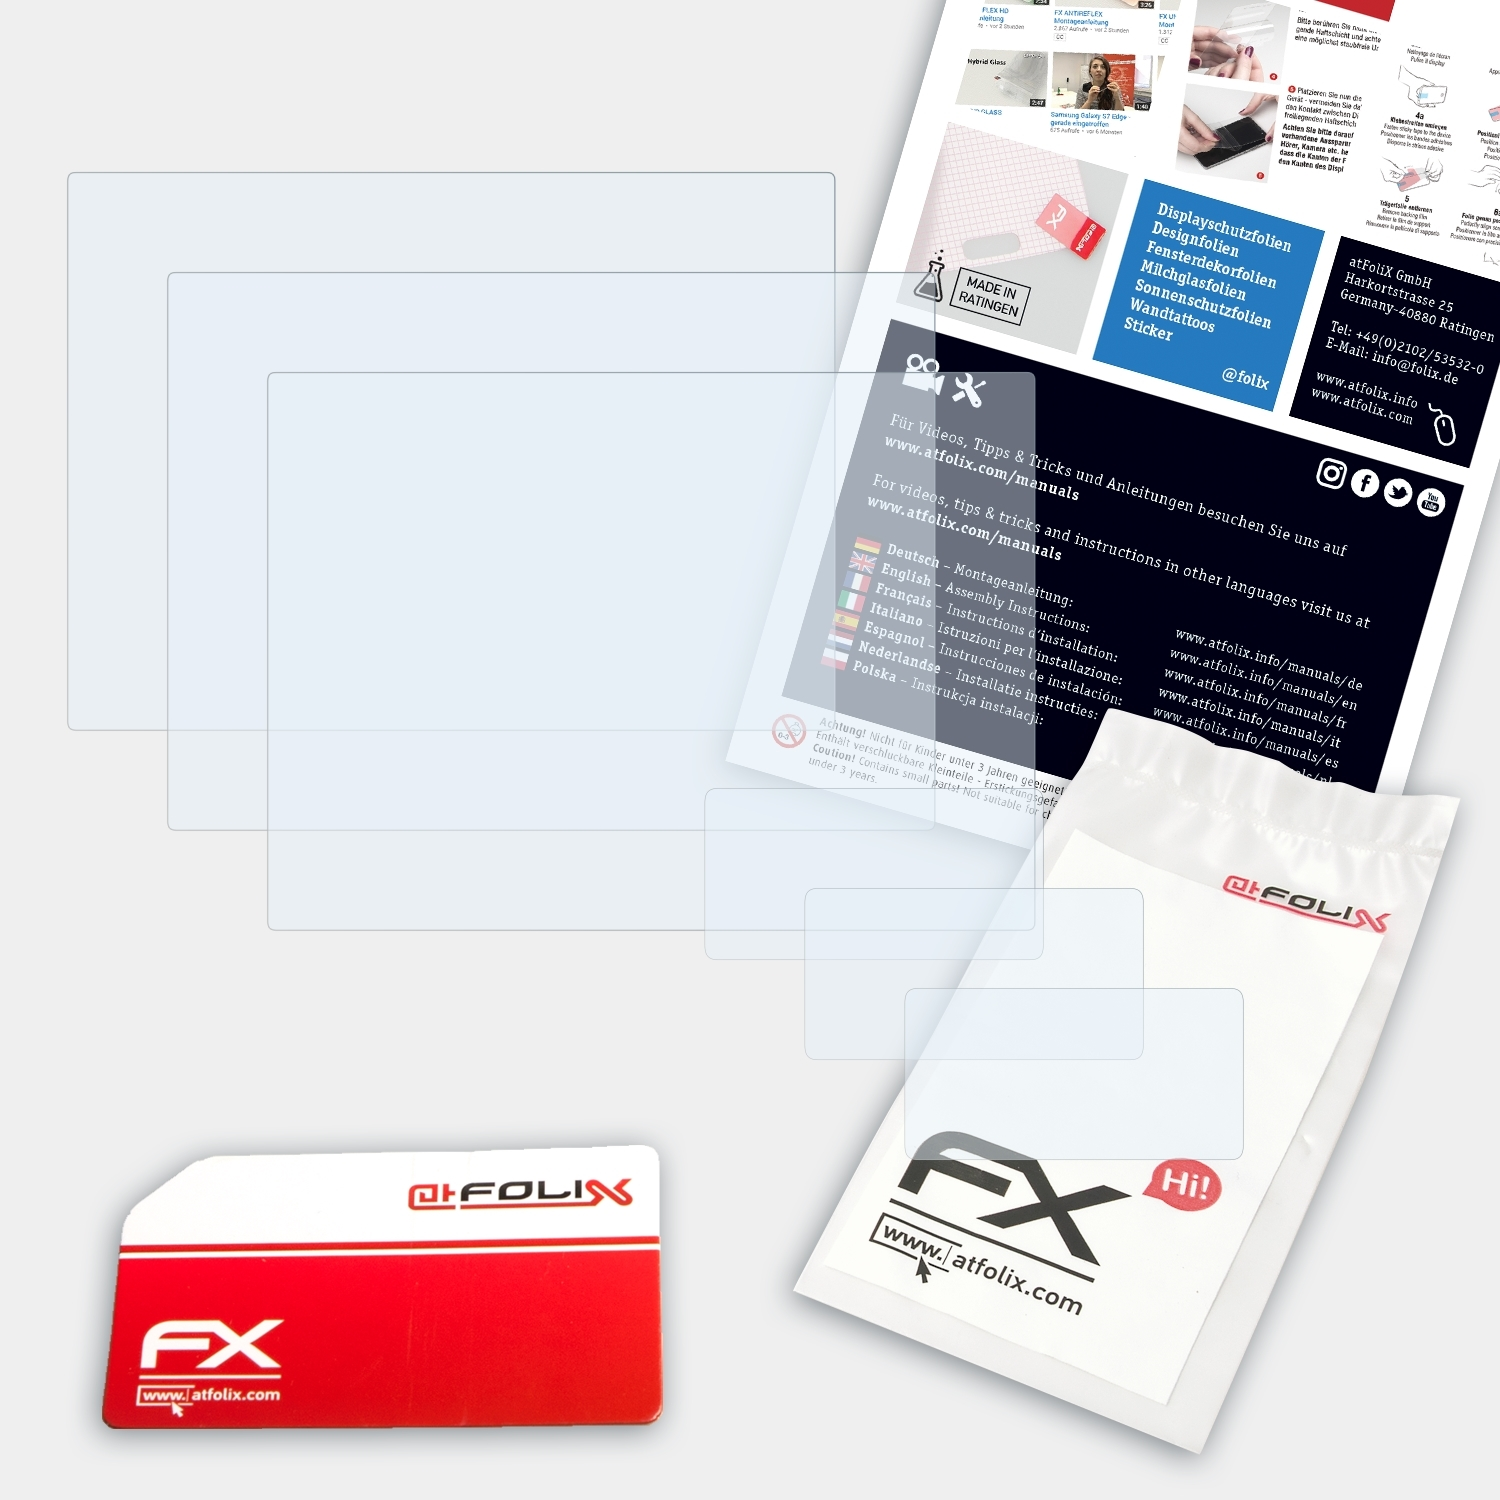 ATFOLIX 3x FX-Clear Sony Displayschutz(für DSC-RX10 II)